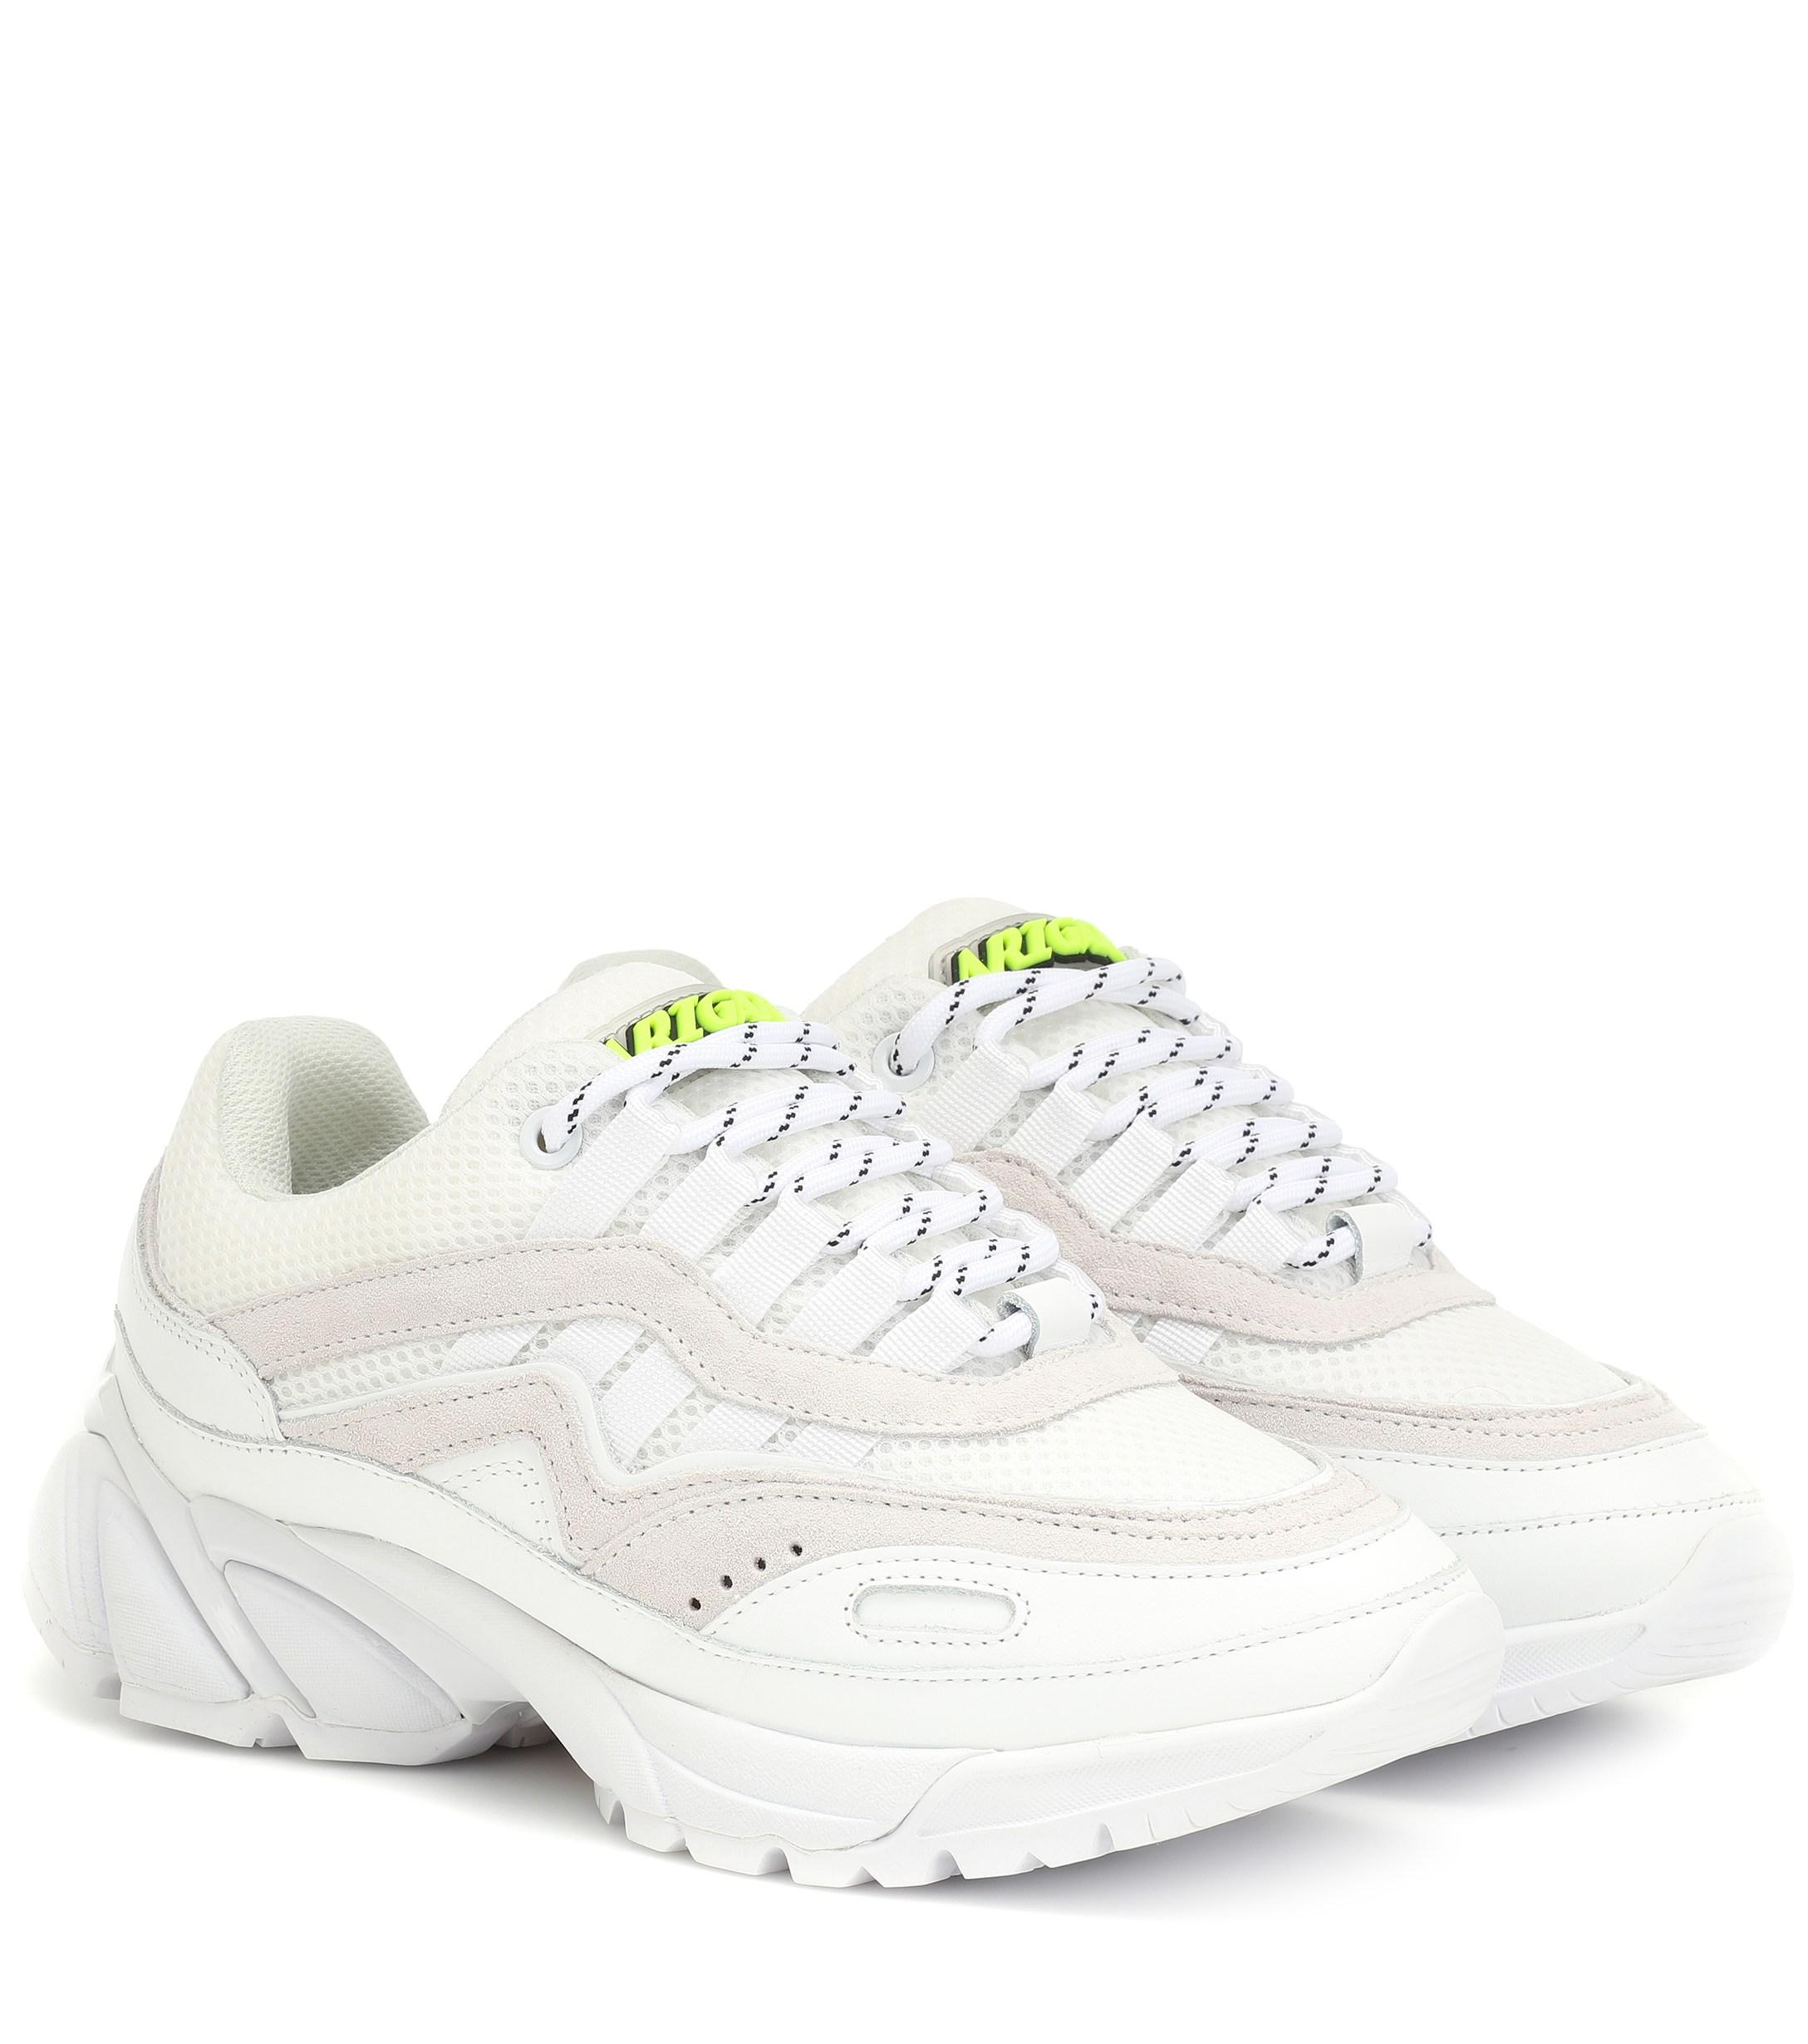 Axel Arigato Demo Runner Sneakers in White Beige (White) - Lyst